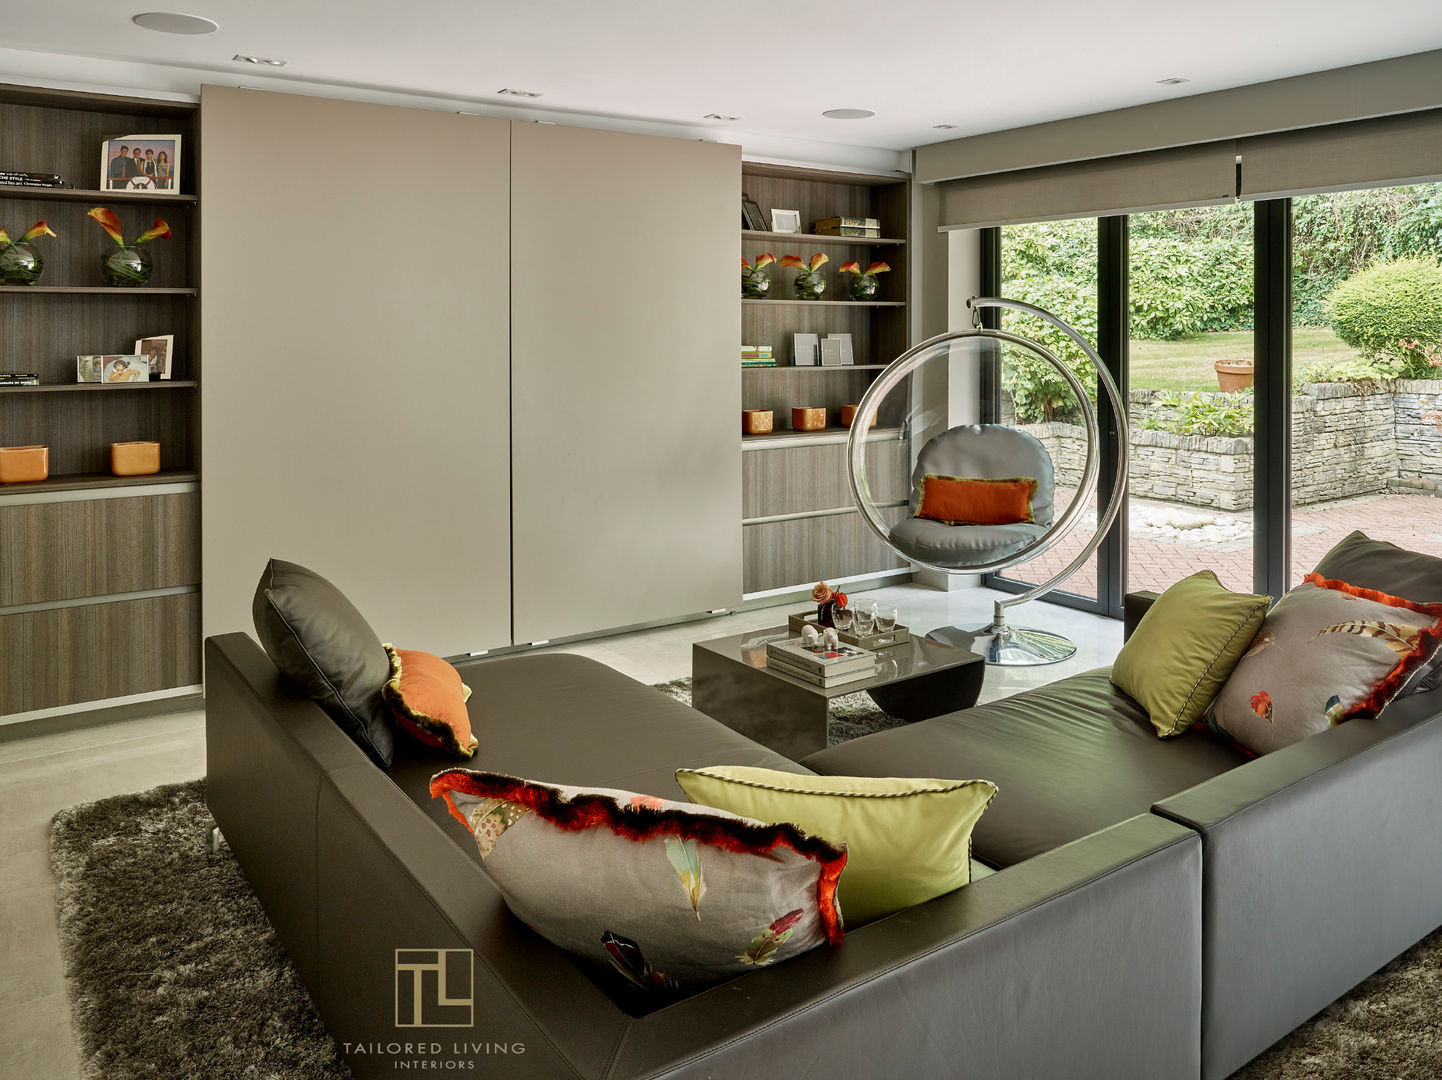 Versatile design Tailored Living Interiors Cocinas de estilo moderno Kitchen designer,interior designer,contemporary kitchen,bespoke design